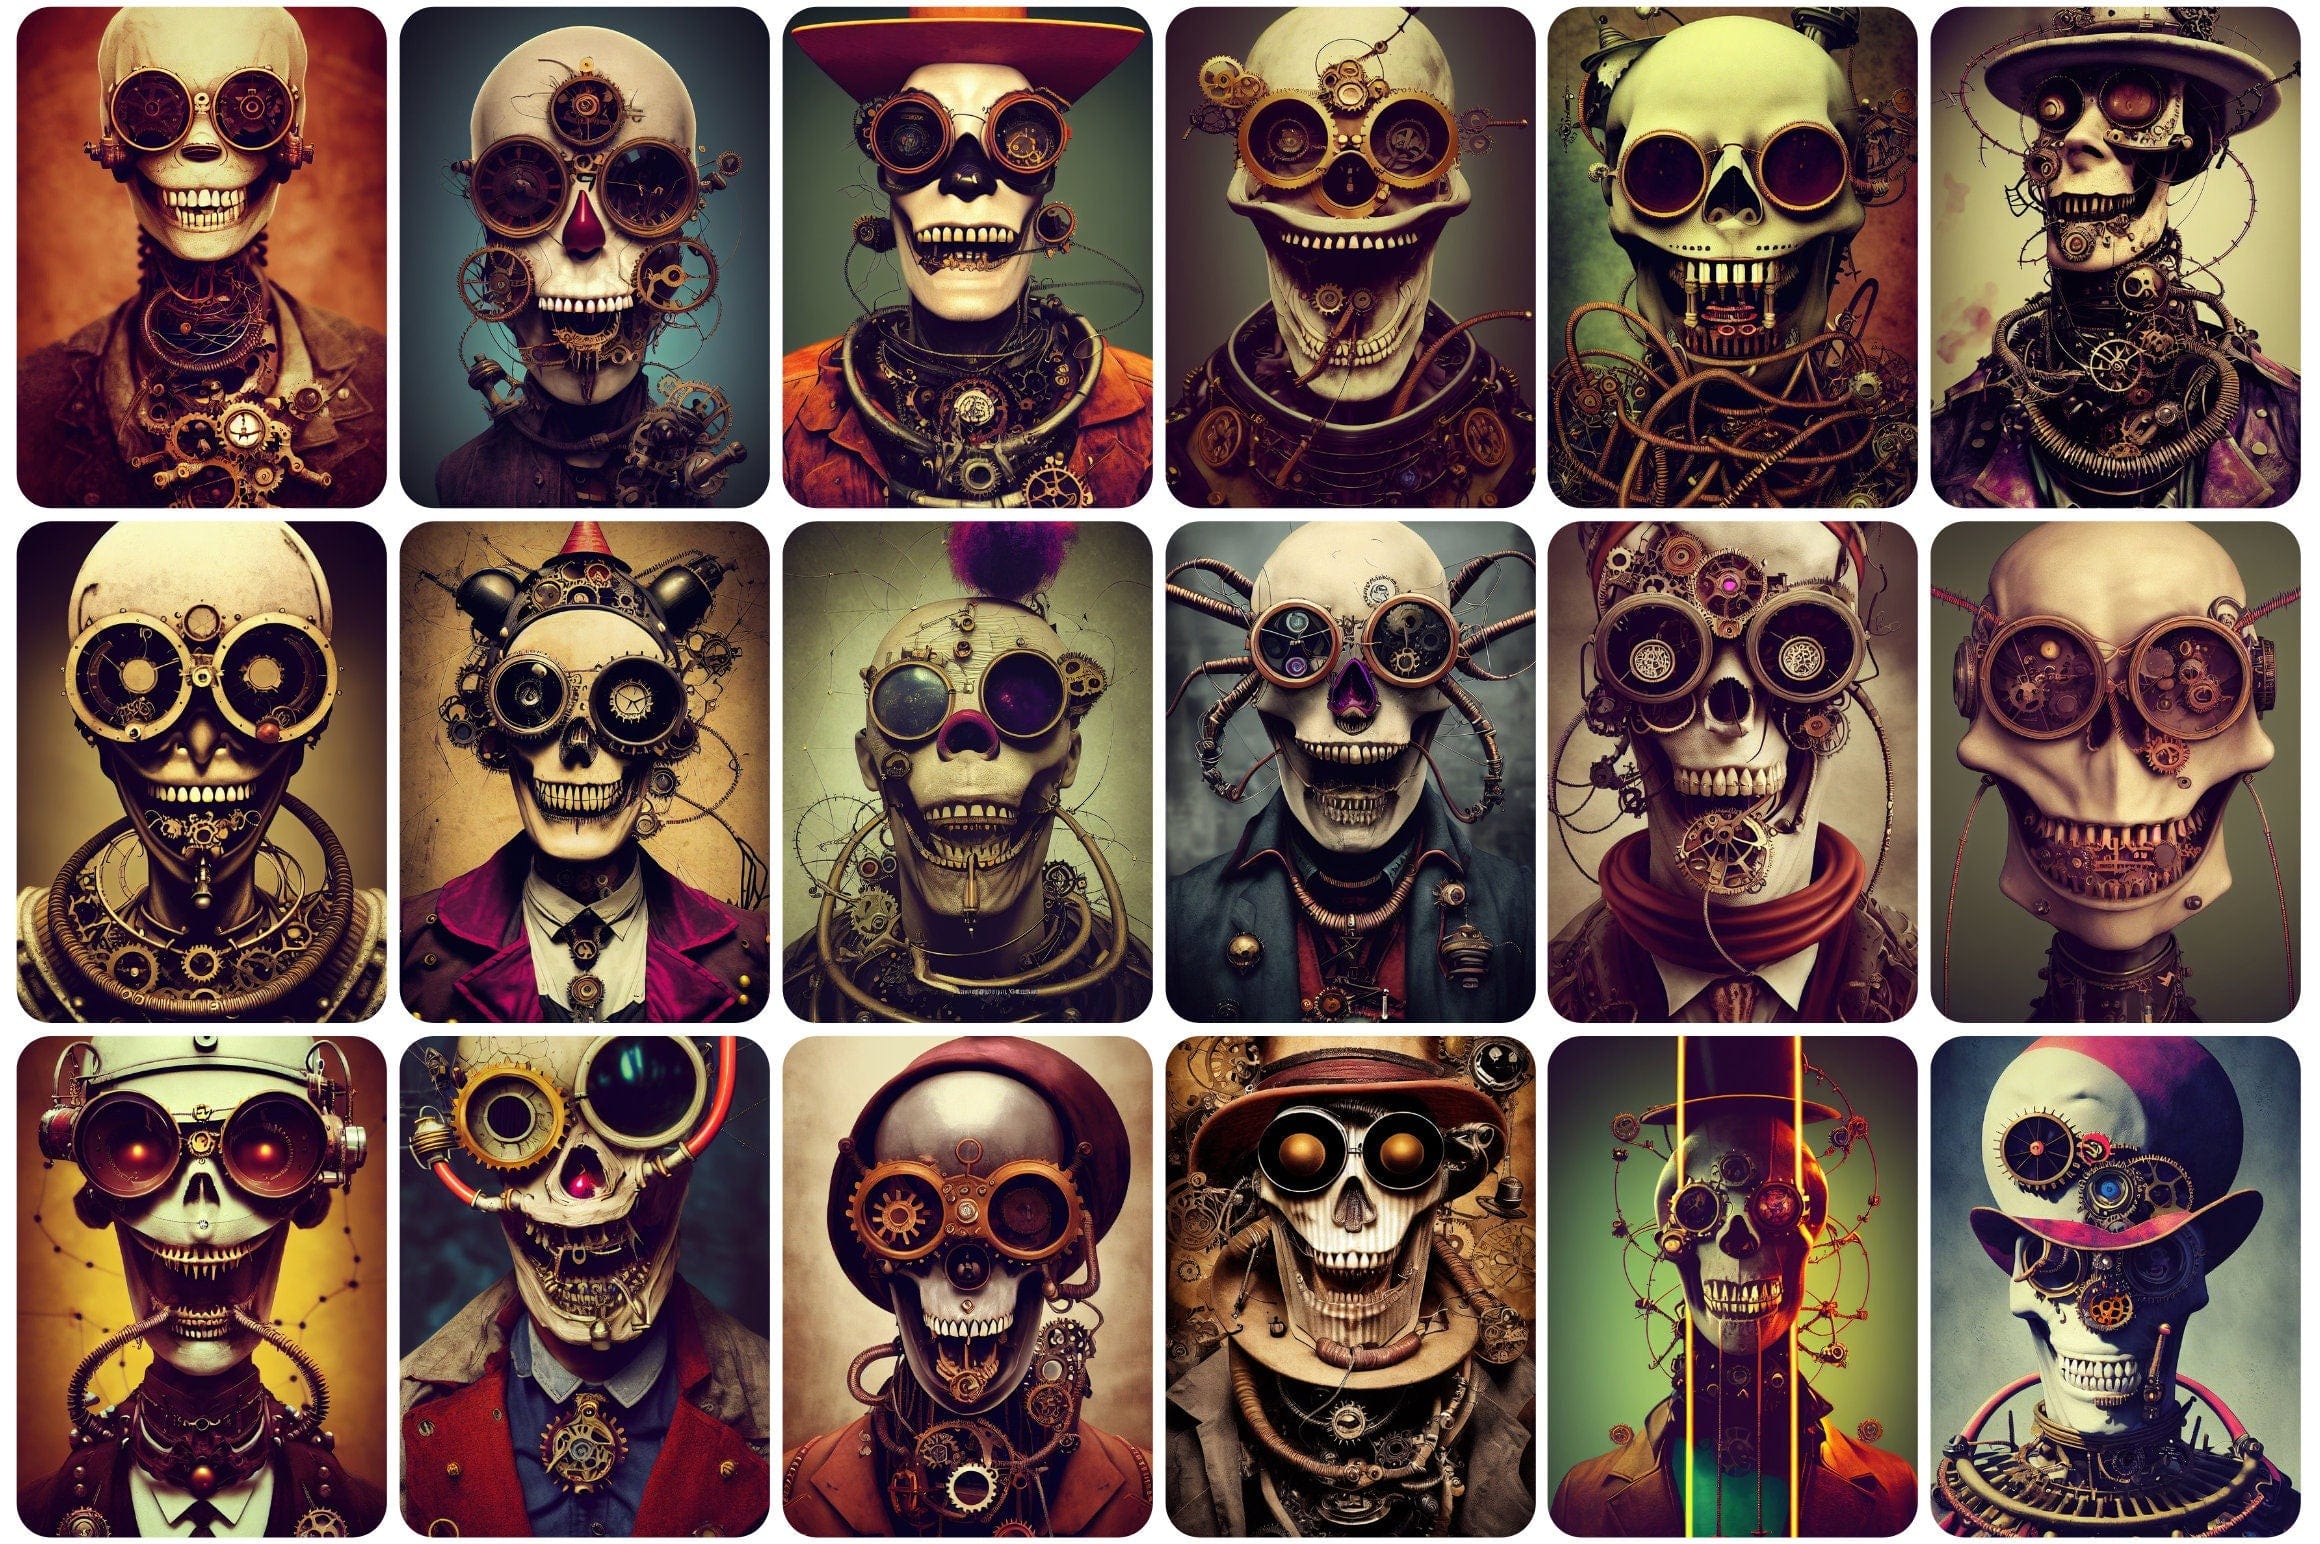 Printable wall art: 200+ Steampunk characters with evil clowns and skulls. Printable Wall Art Set, Digital Download Digital Download Sumobundle